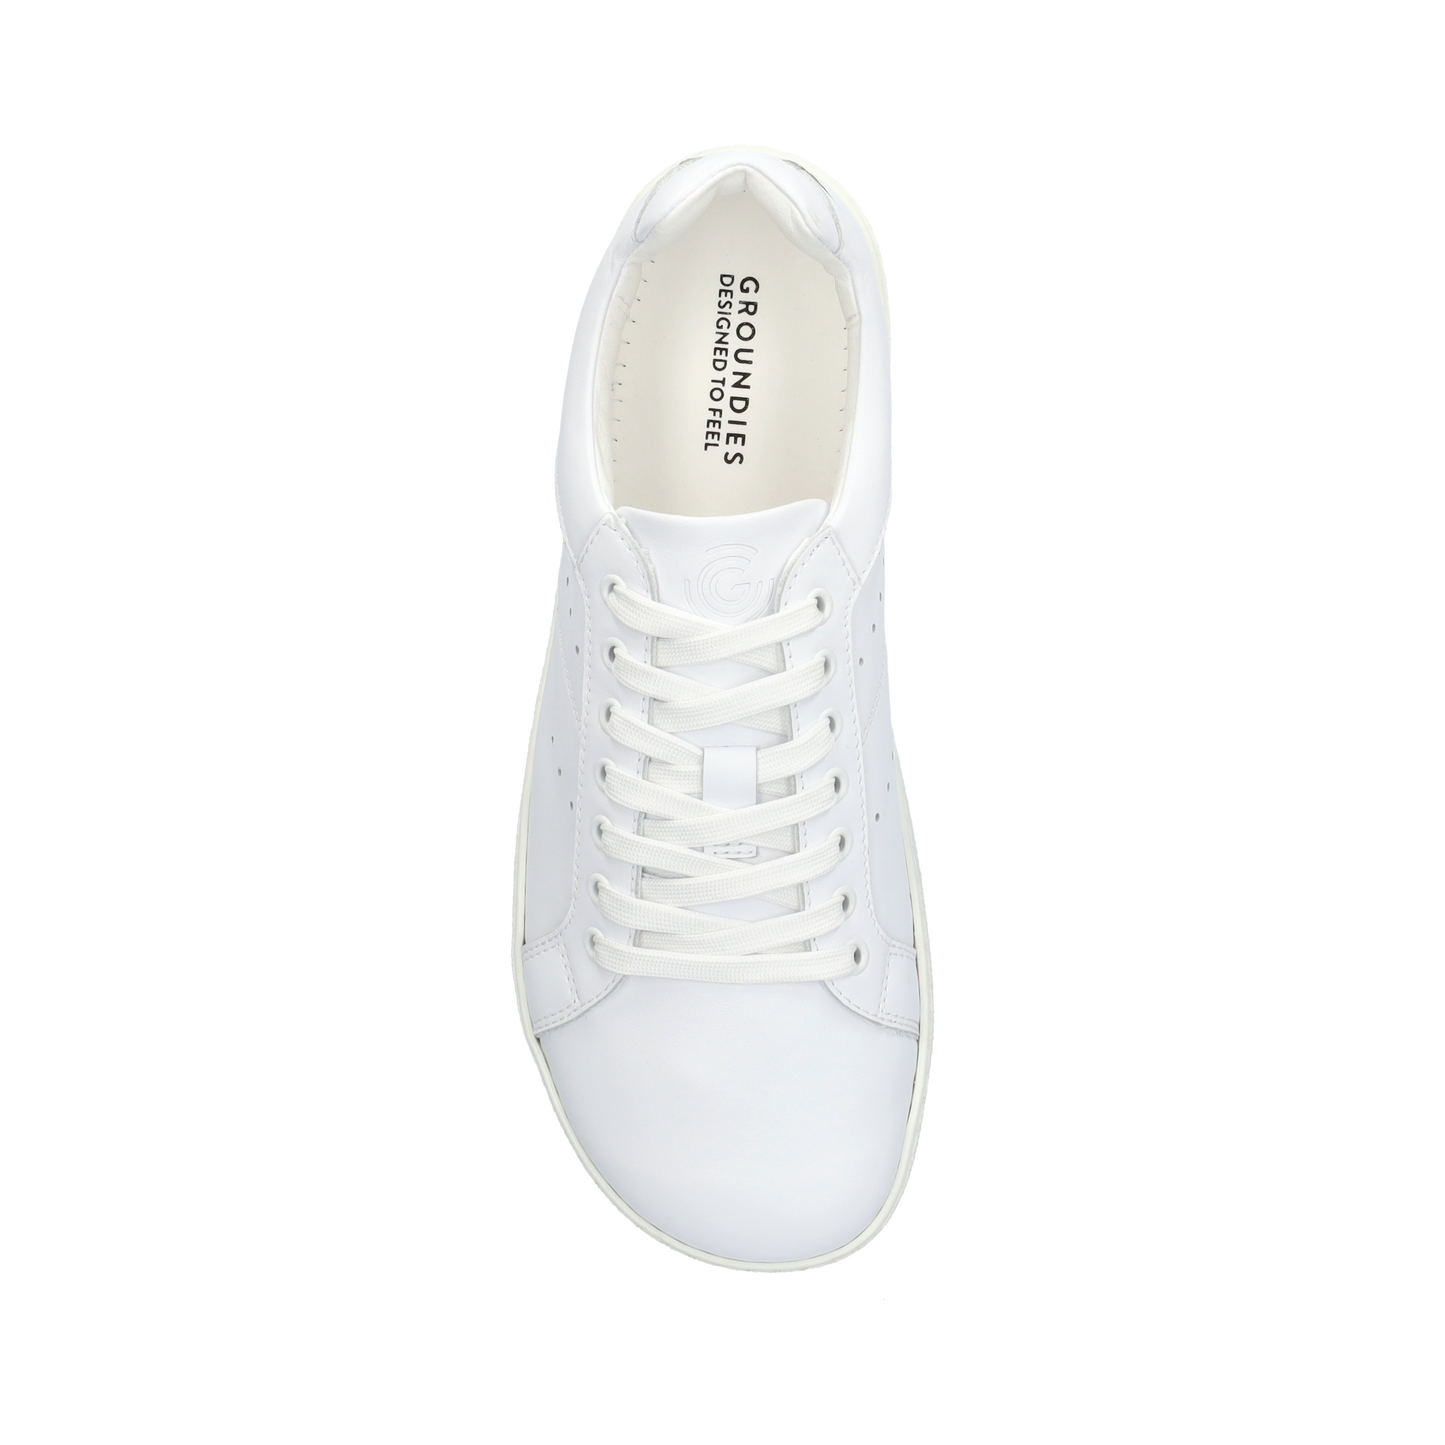 Groundies Universe Pure Women barfods sneakers til kvinder i farven white, top